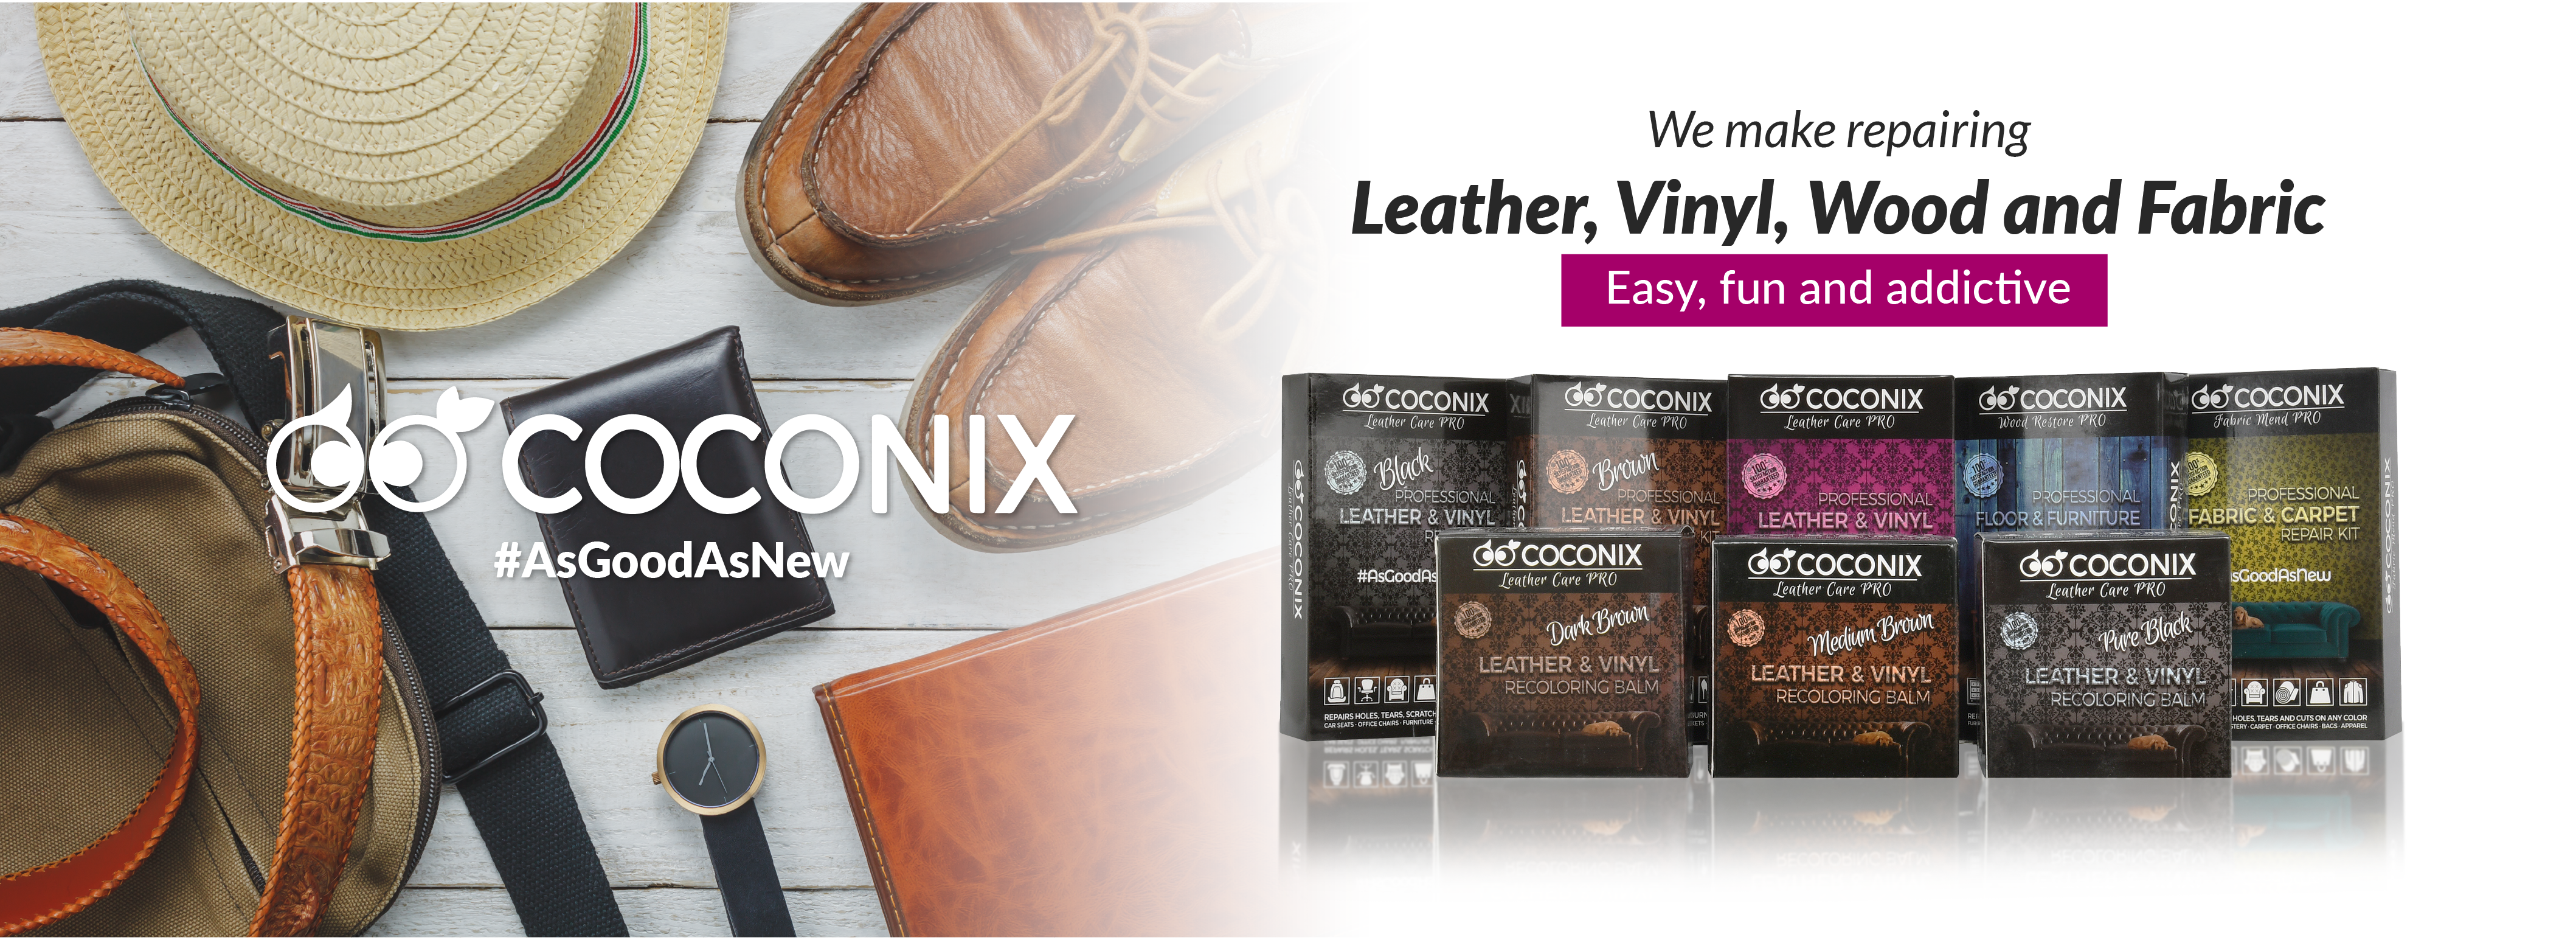 COCONIX Brown Leather and Vinyl Repair Kit - Nepal